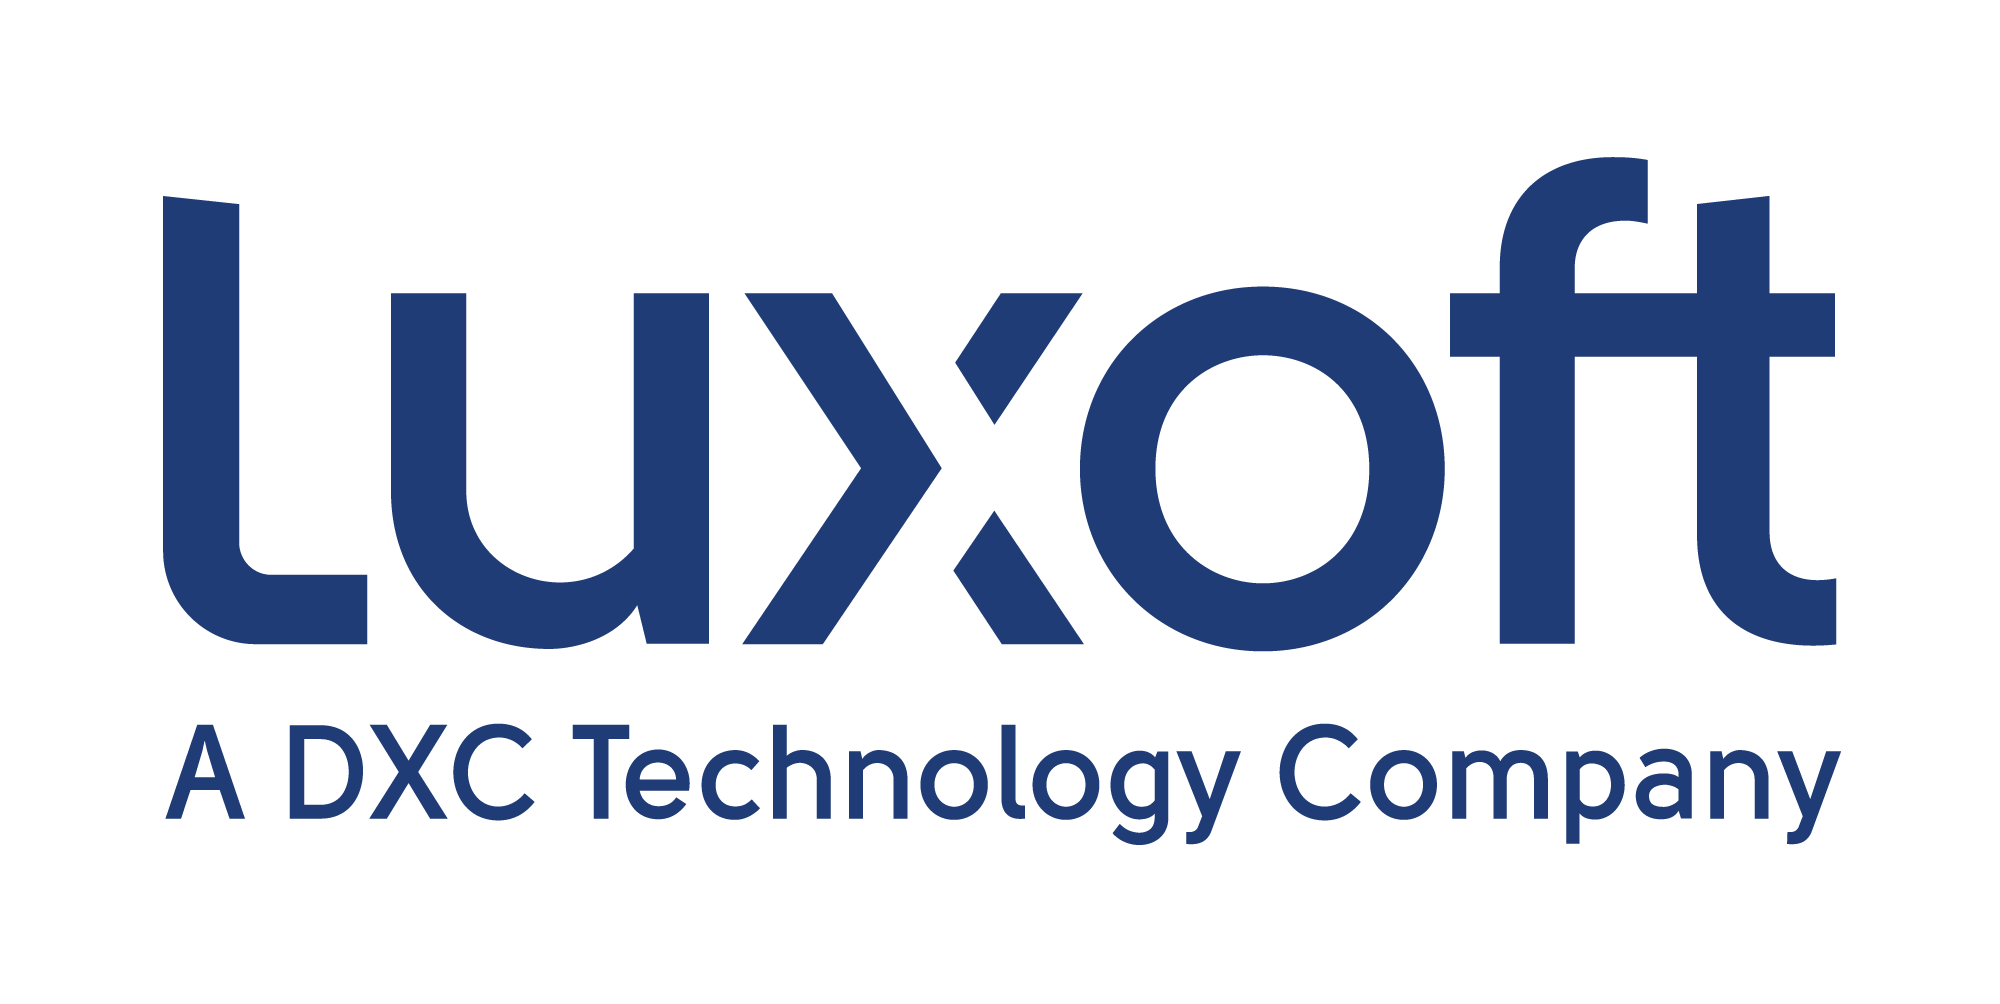 LUXOFT_DXC_logo_rgb_blue_2019